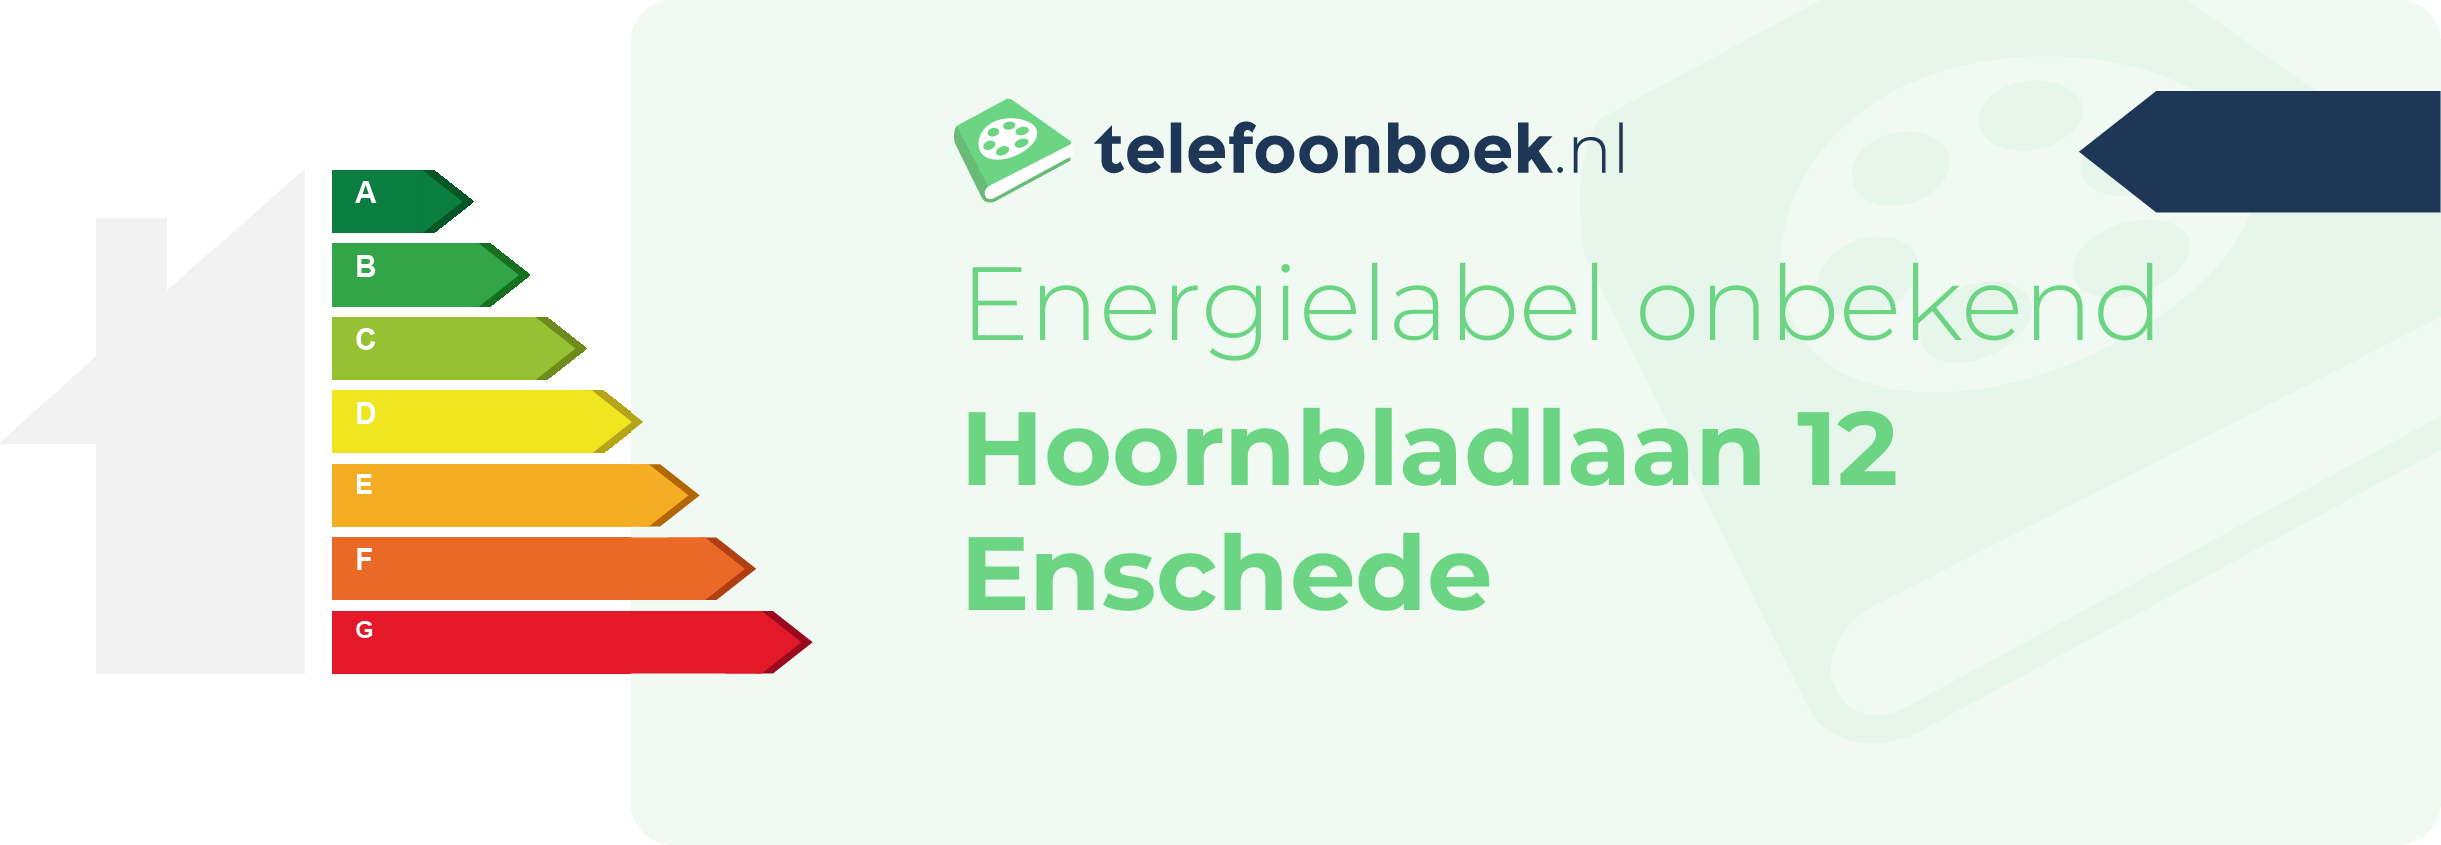 Energielabel Hoornbladlaan 12 Enschede